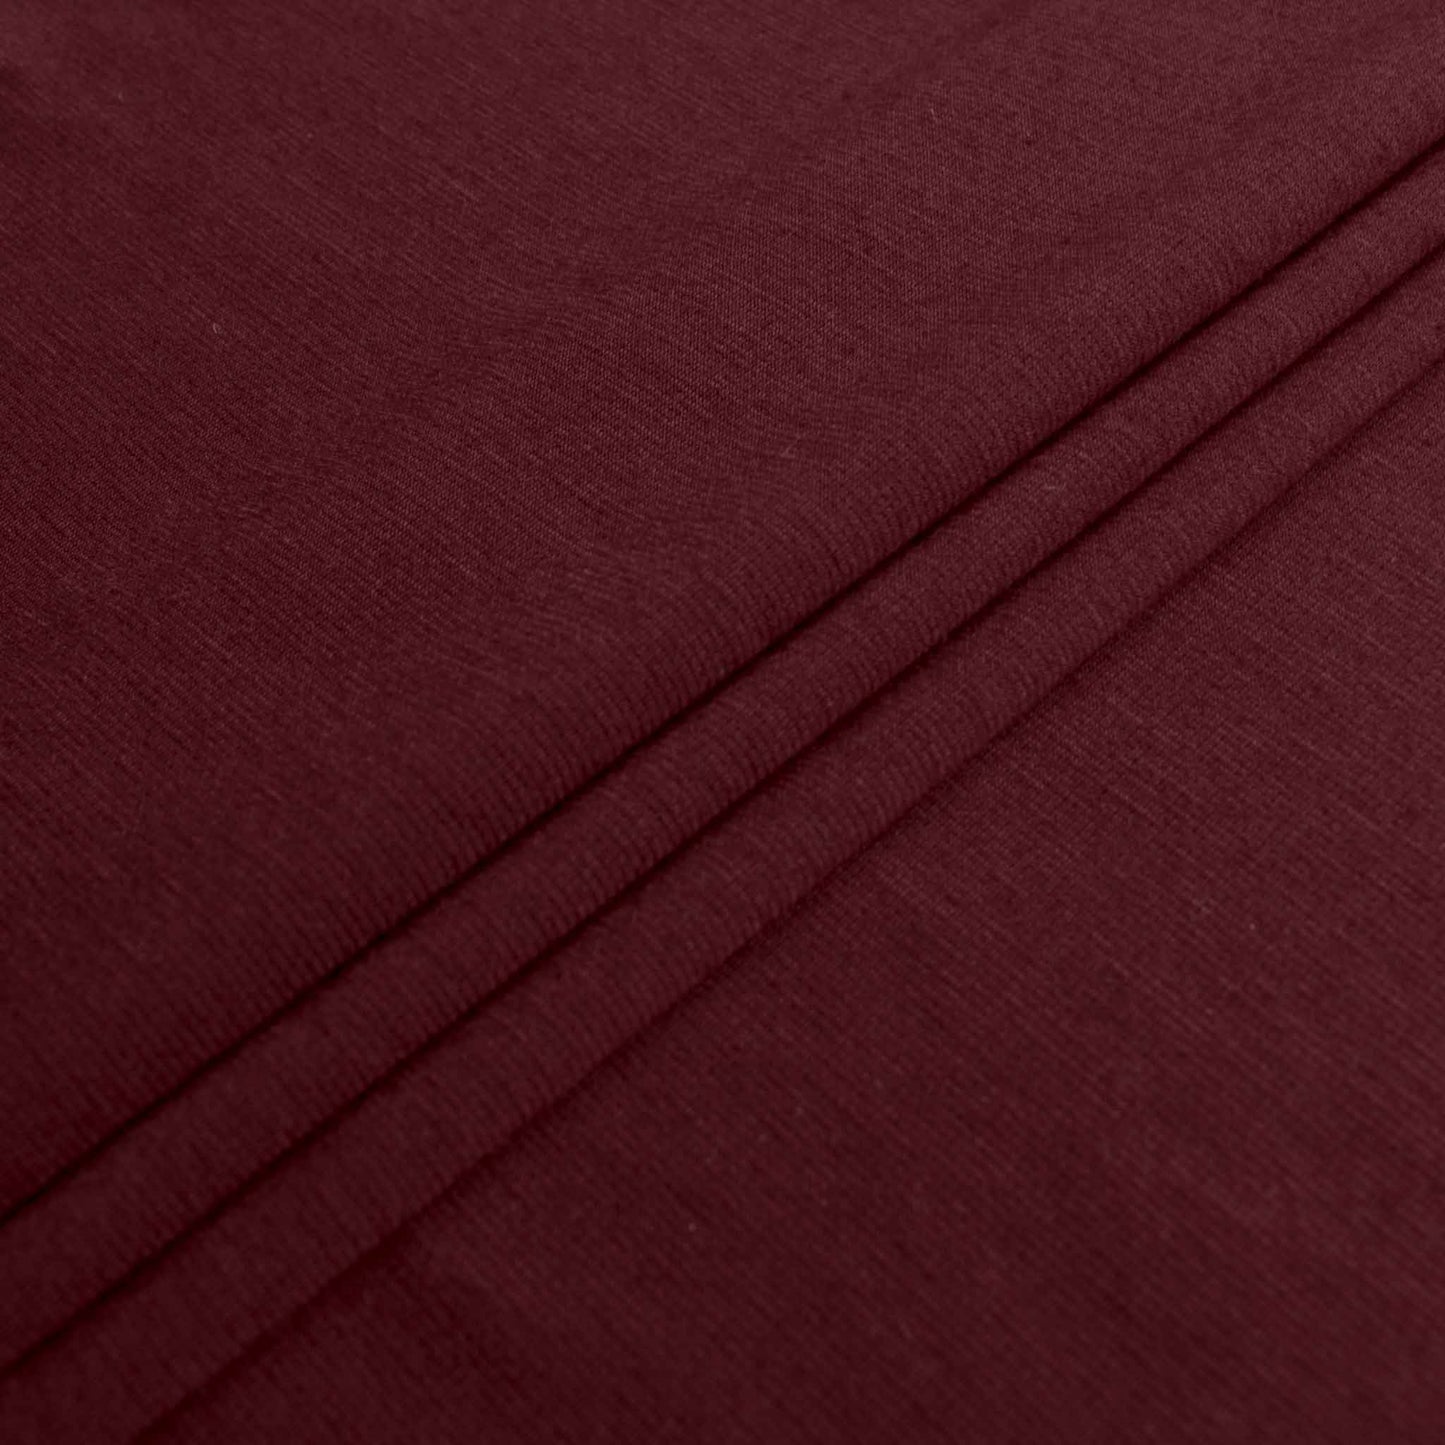 folded maroon jersey knit ponte roma dressmaking fabric 